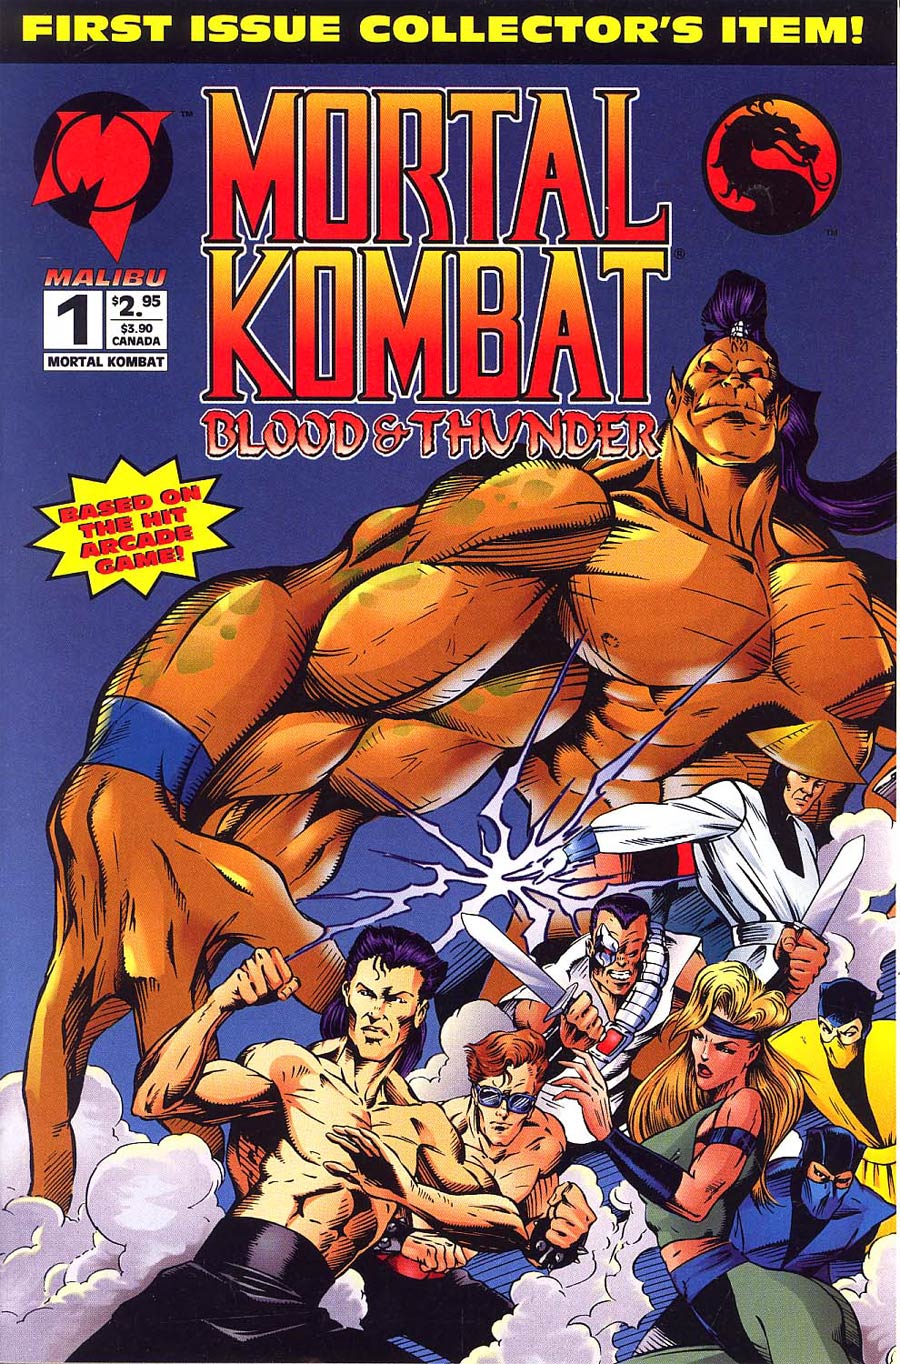 Mortal Kombat Blood And Thunder #1 Cover A Regular Art Cover